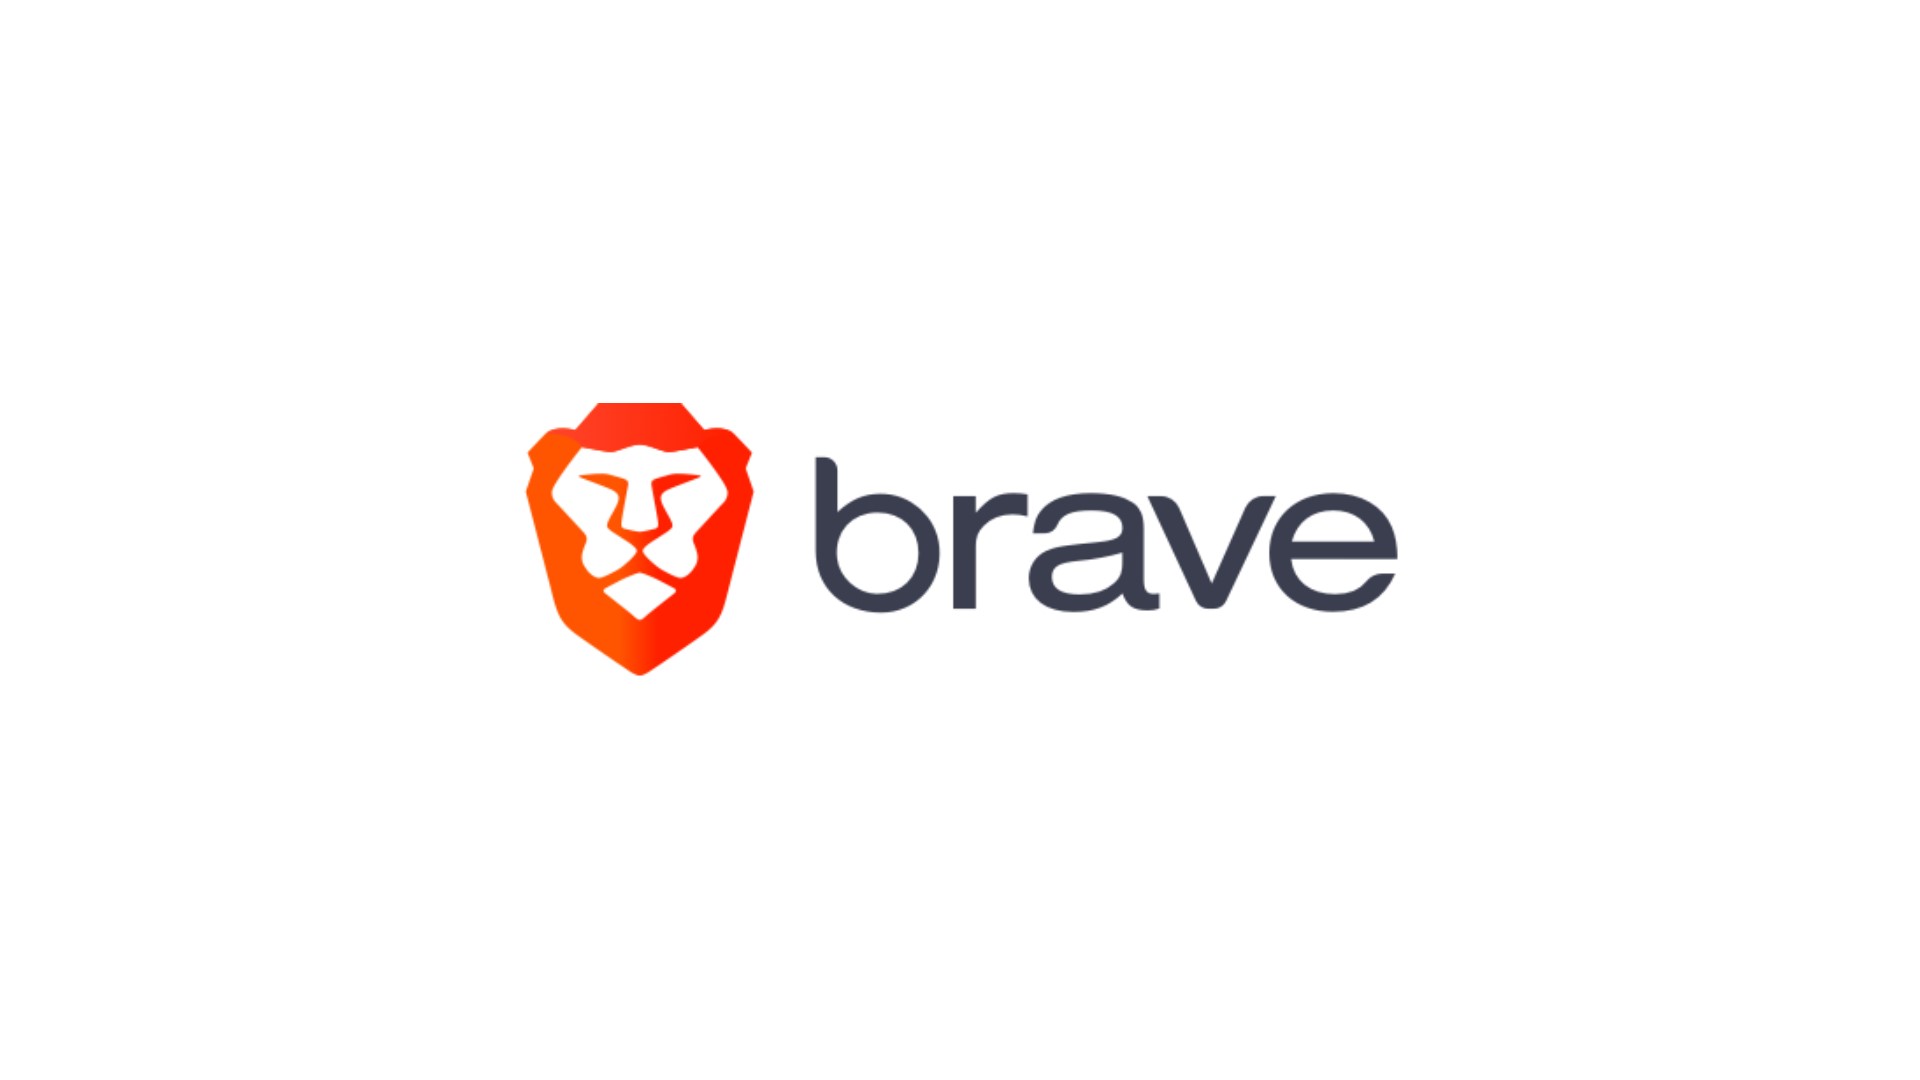 brave web browser logo